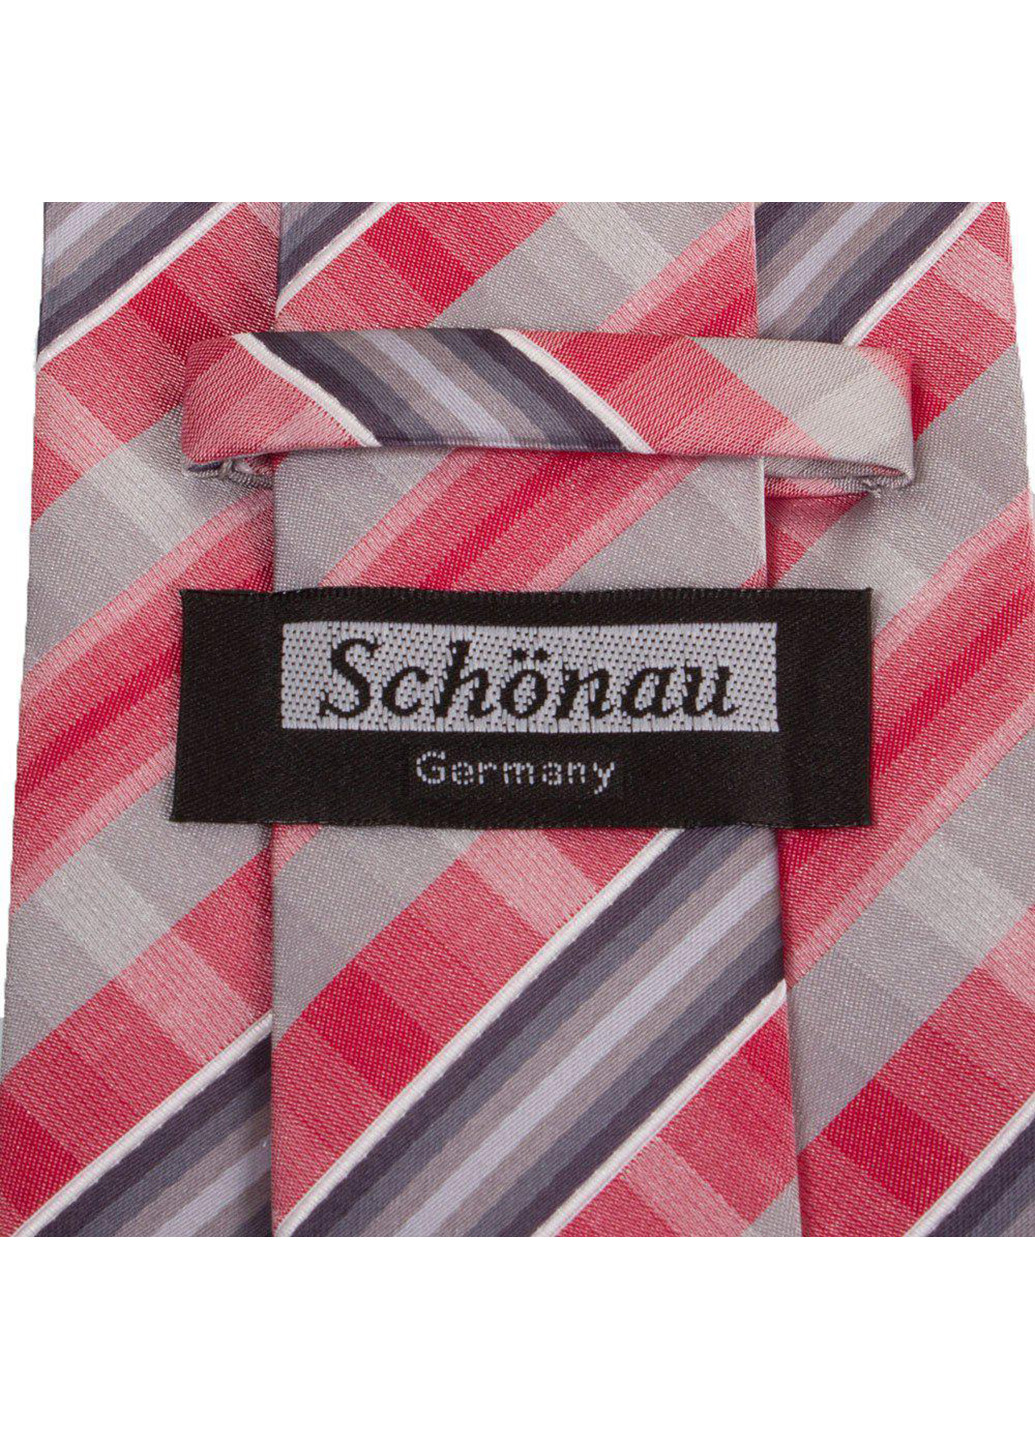 Мужской галстук 150,5 см Schonau & Houcken (252129891)